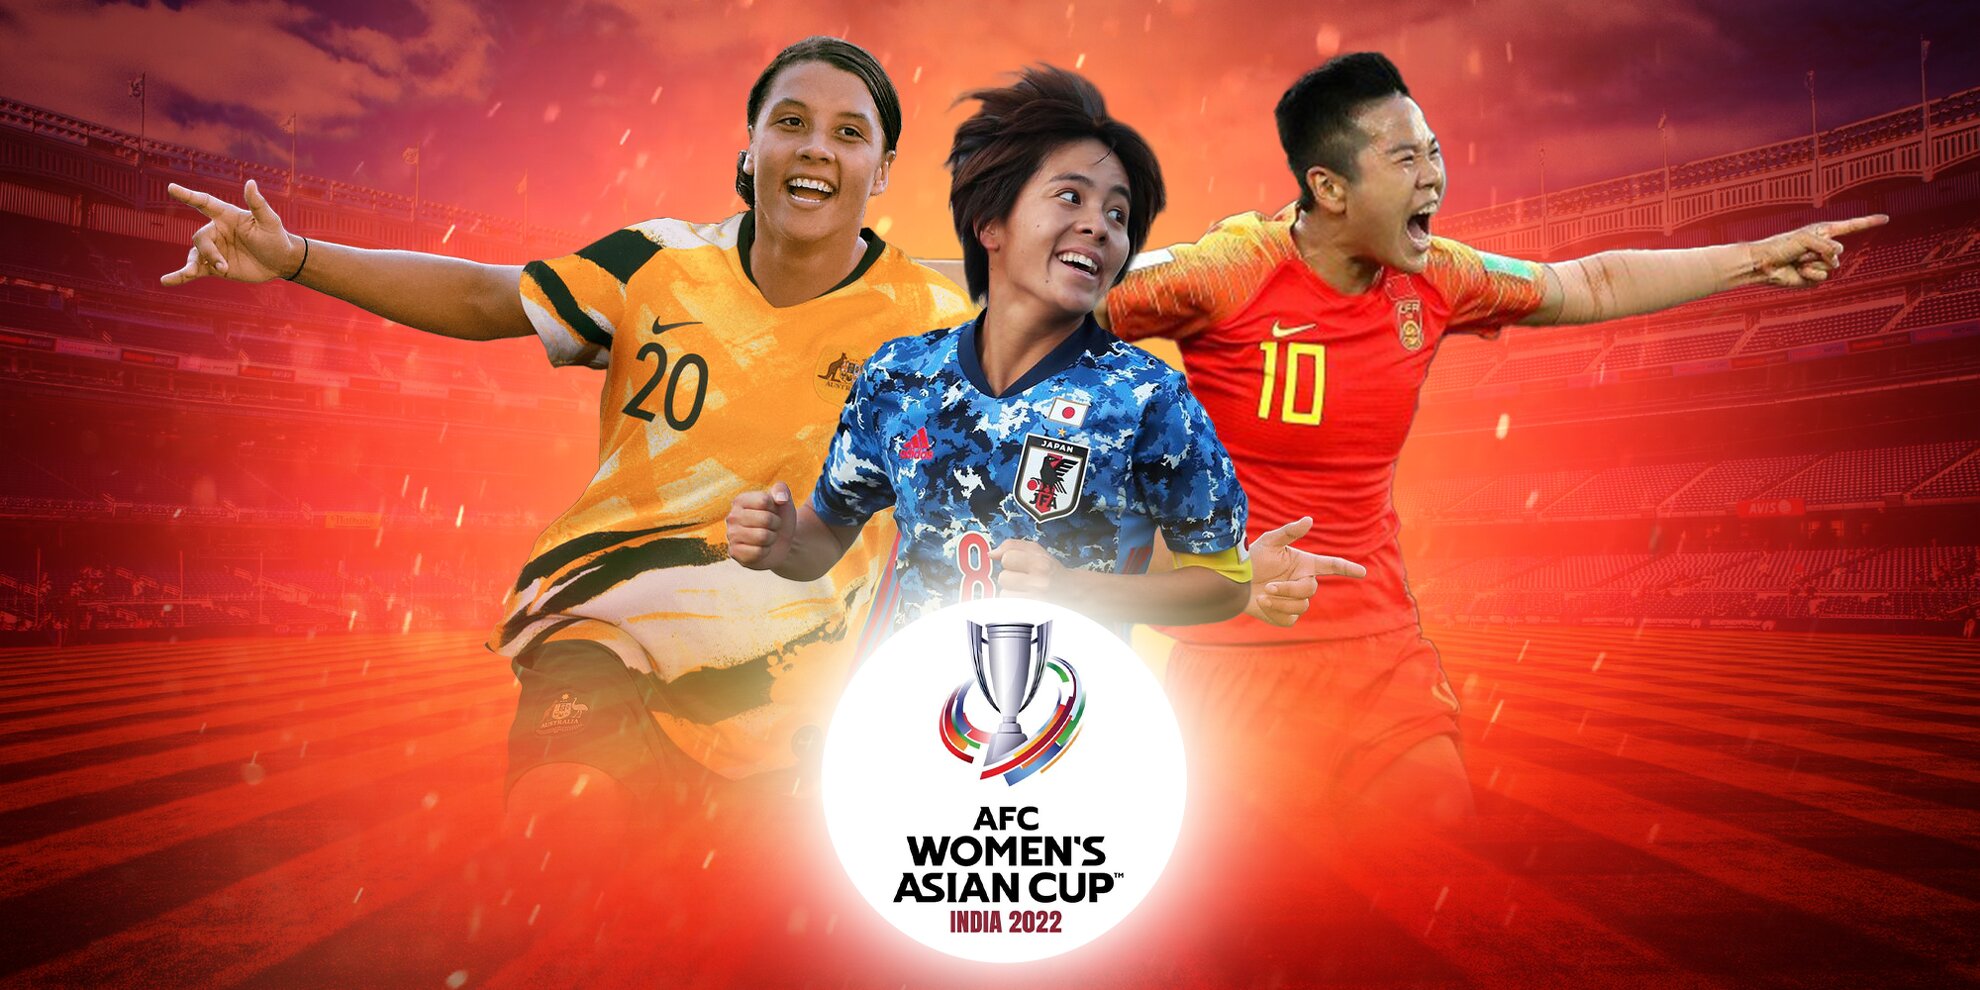 Afc women asian cup 2022